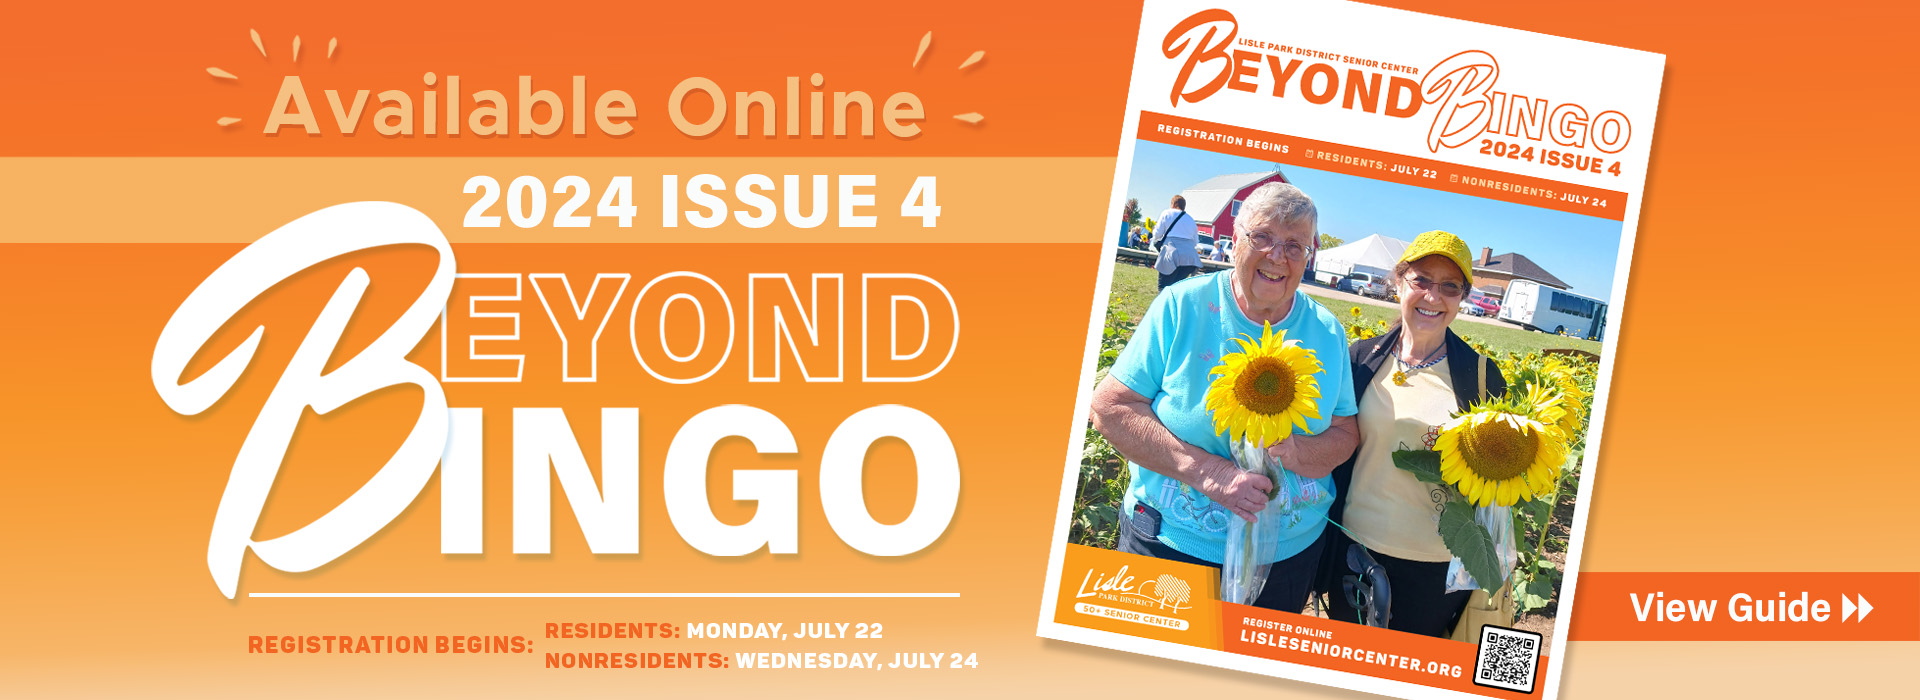 50+ Beyond Bingo 2024 Issue 4 Program Guide